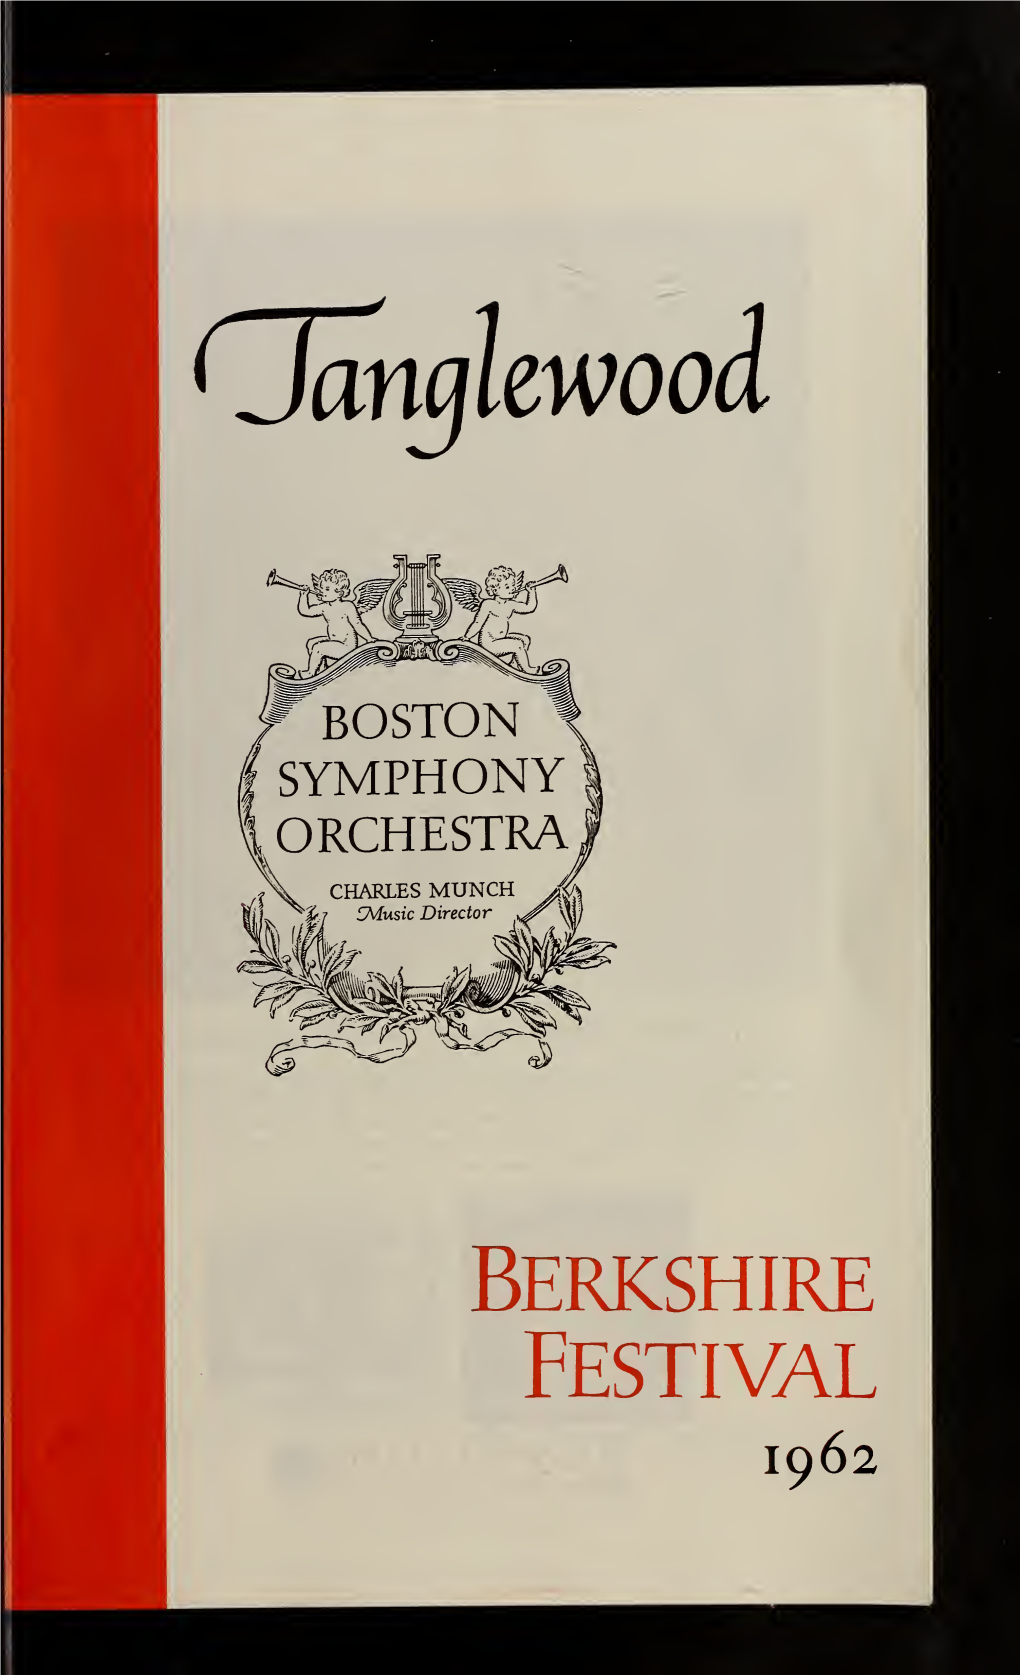 Boston Symphony Orchestra Concert Programs, Summer, 1961-1962